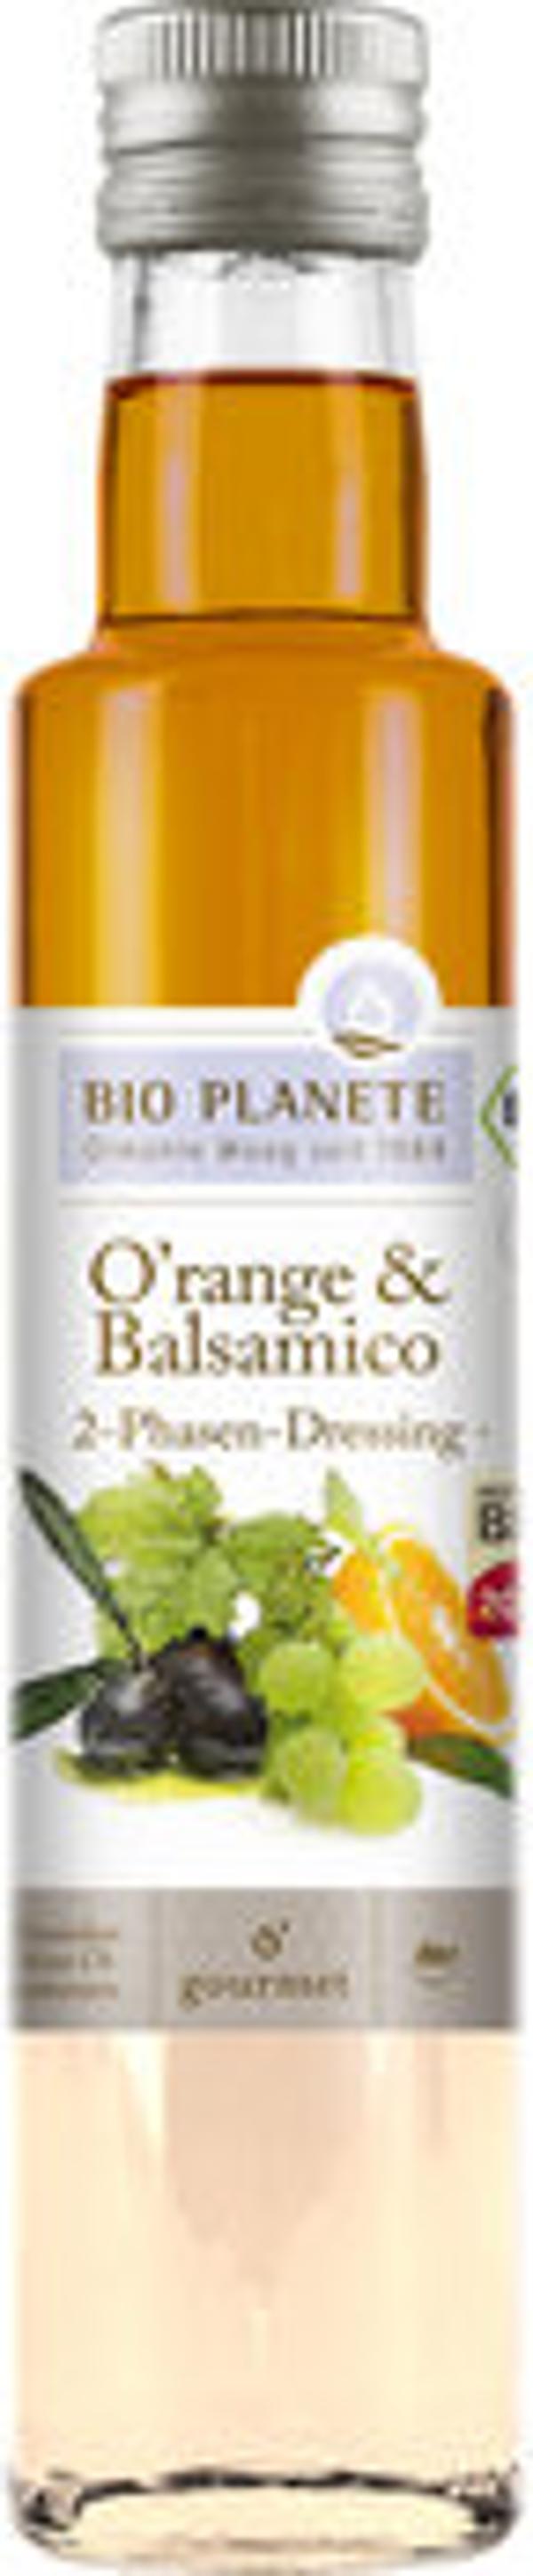 Produktfoto zu O'range & Balsamico 2-Phasen-Dressing